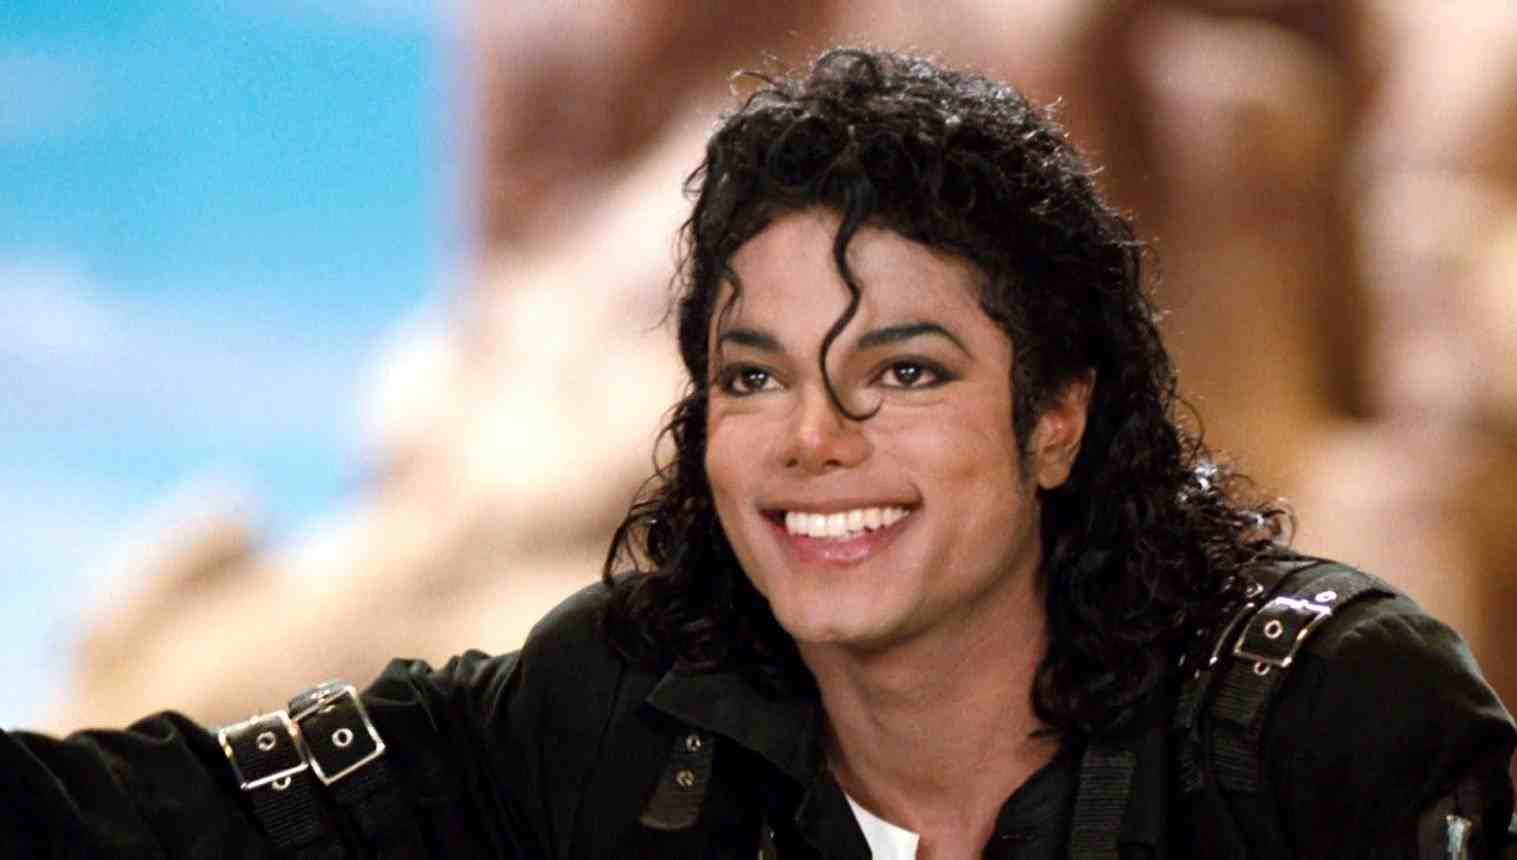 Michael Jackson Wallpaper Smile Theboxing Org